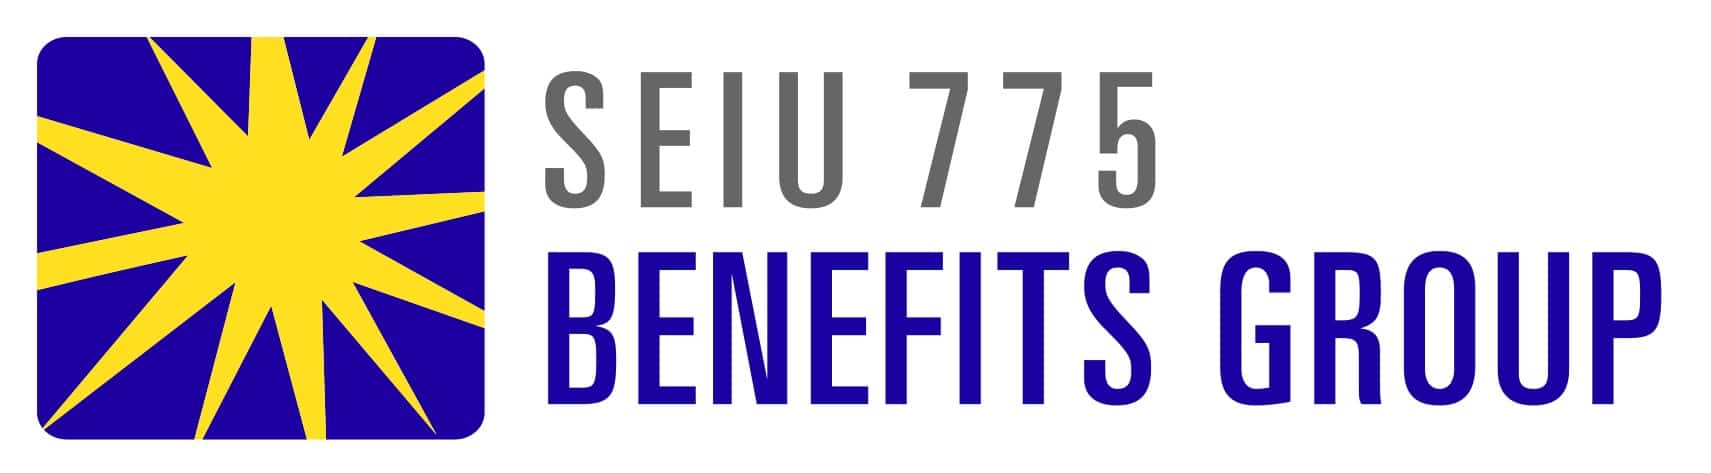 SEIU 775 logo